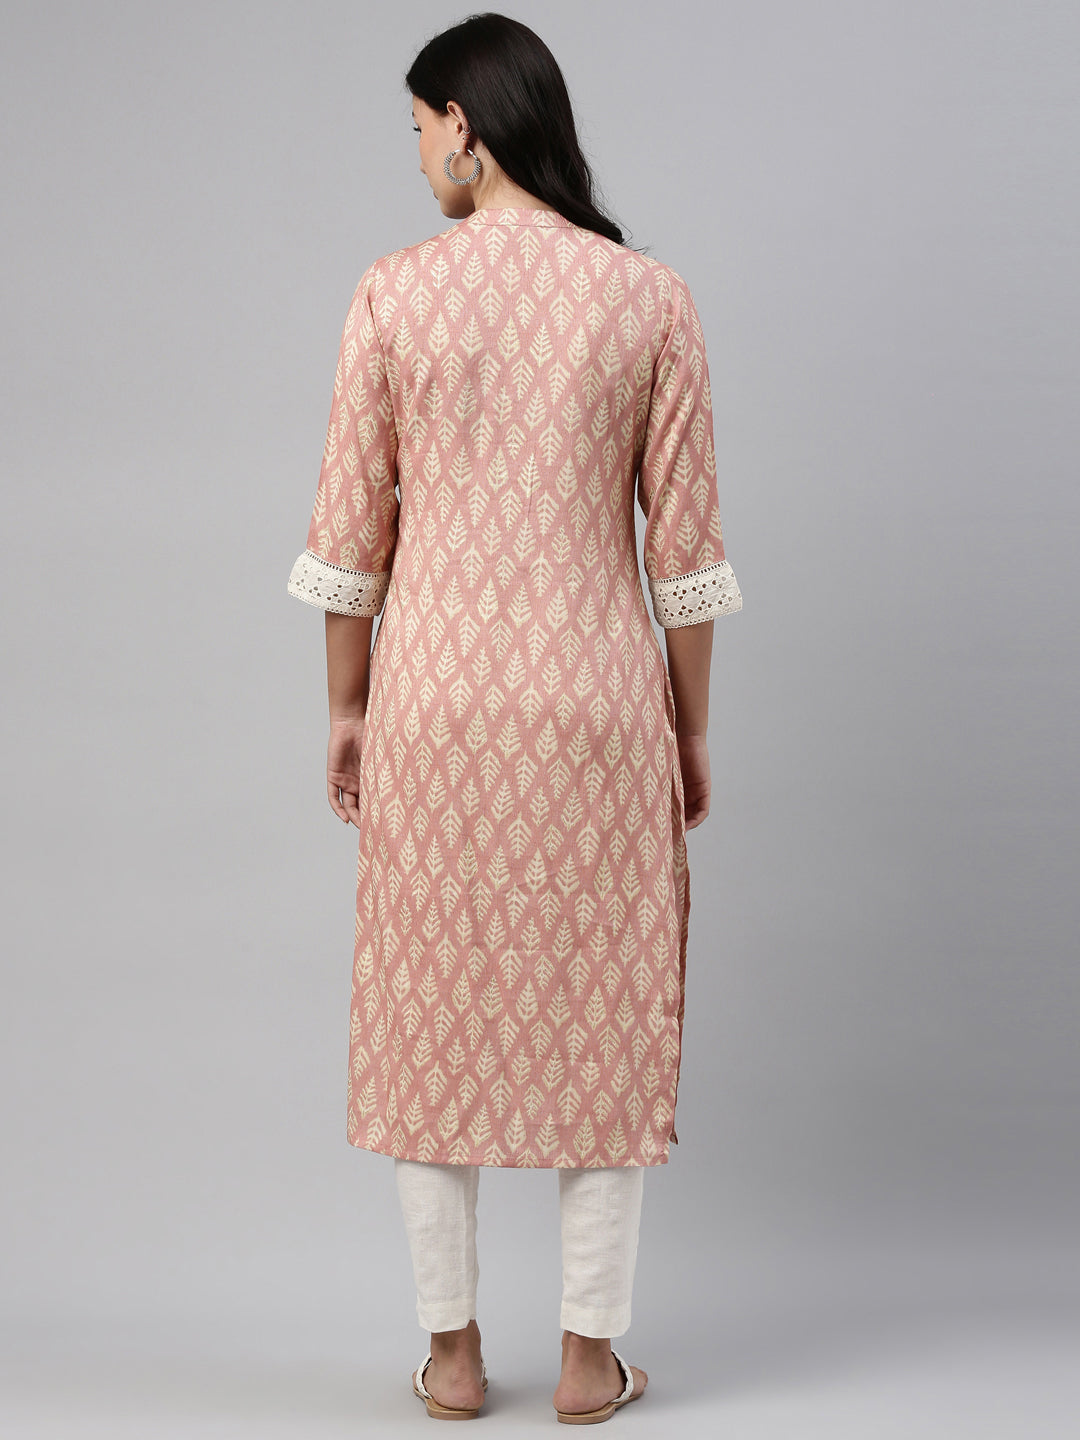 Neeru's Pink Color Rayon Fabric Tunic